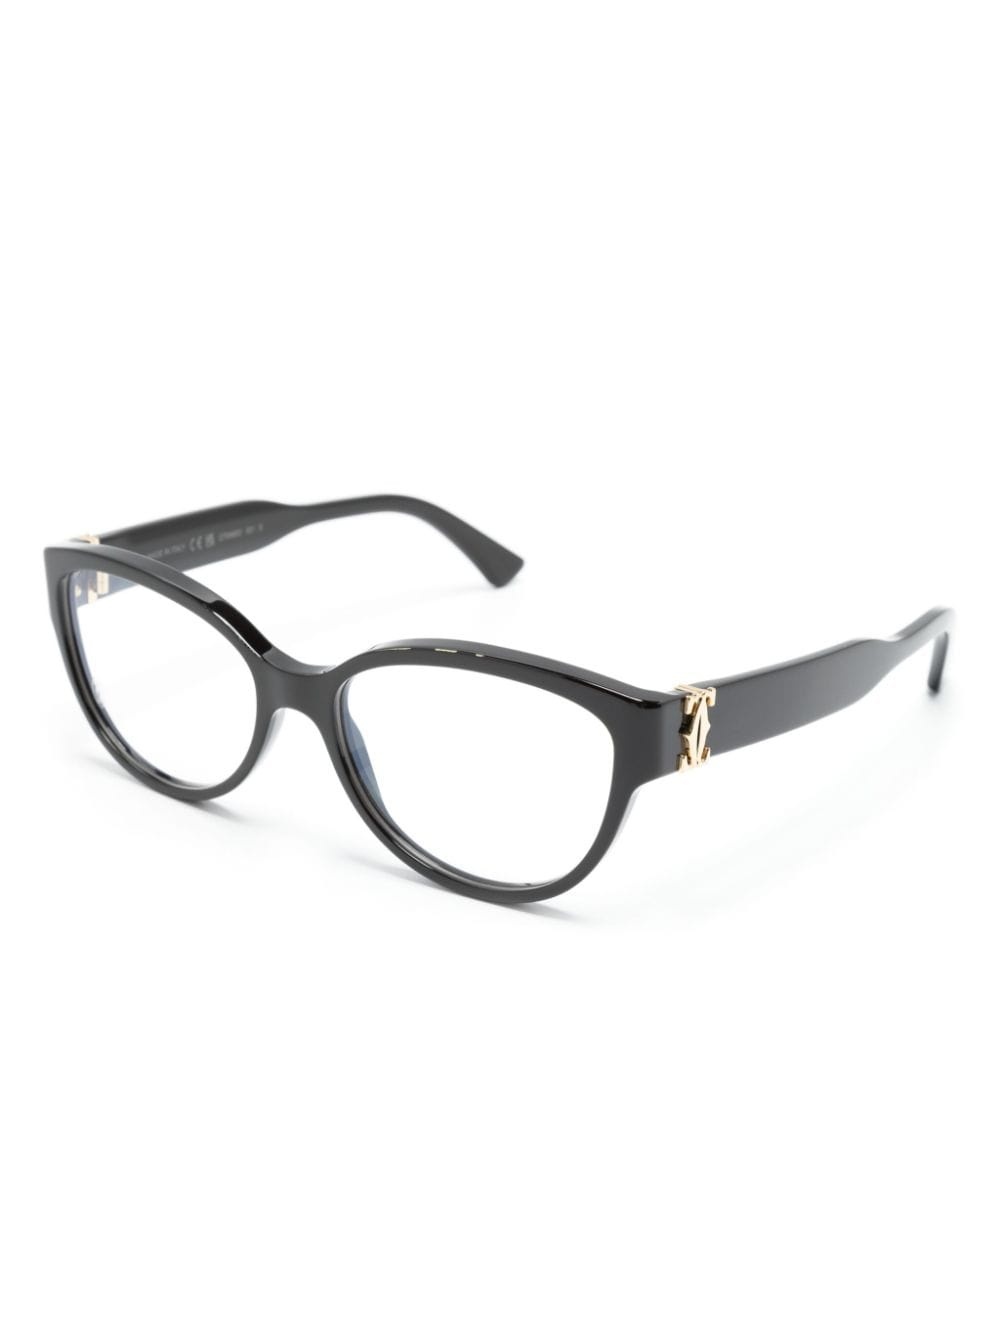 Duplo C cat-eye glasses - 2